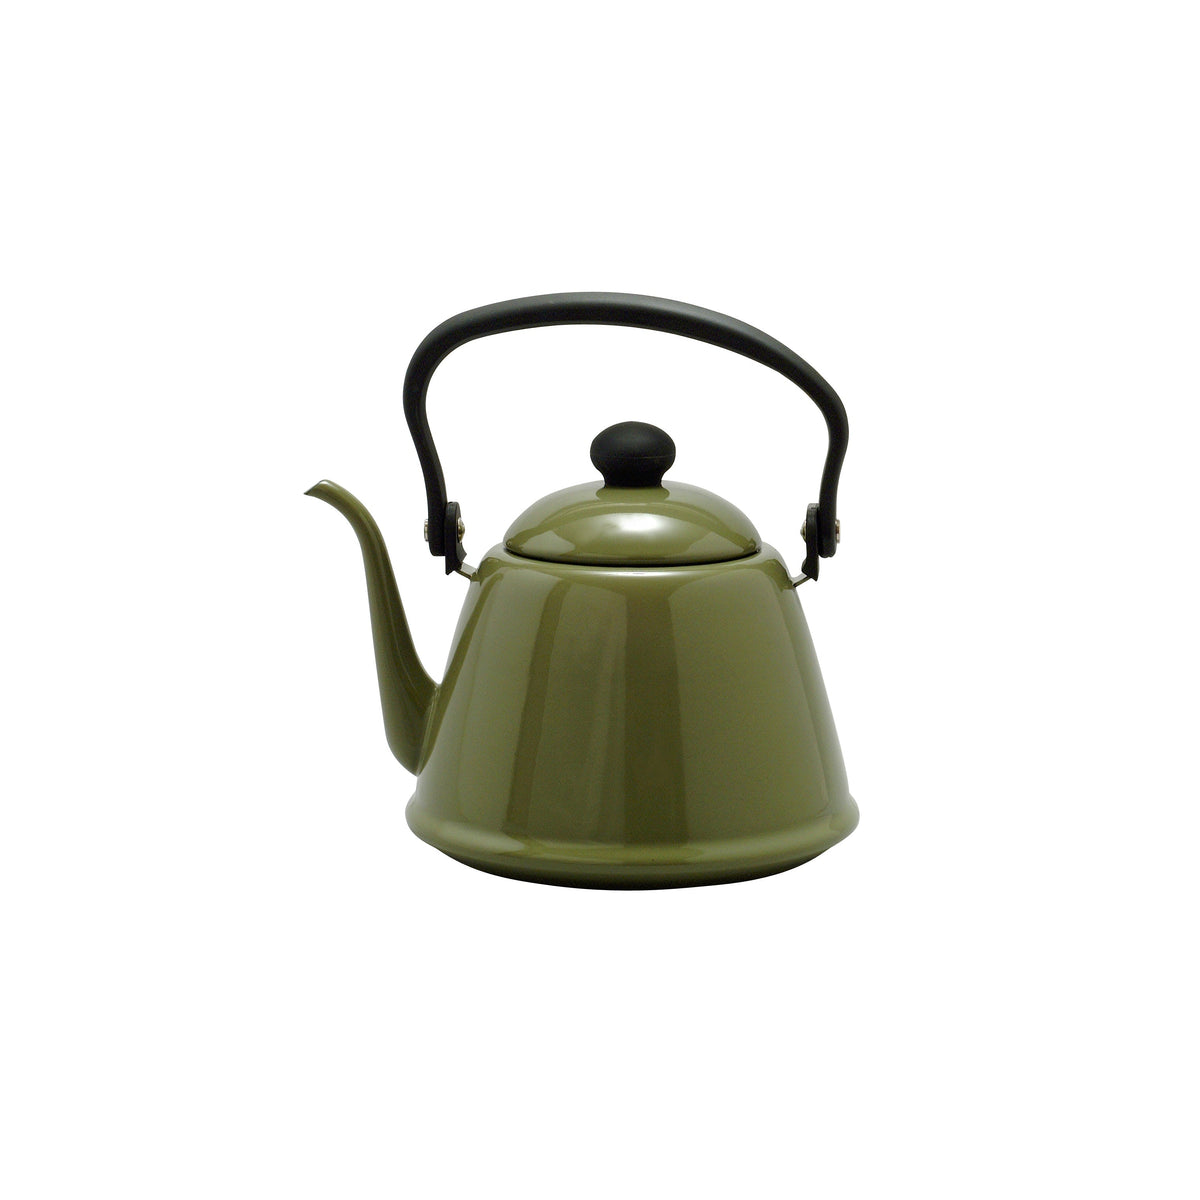 Showa era • Rattan handle • Matcha green enamel kettle • Camping coffee pot  - Shop yesterdaynicethings Pitchers - Pinkoi